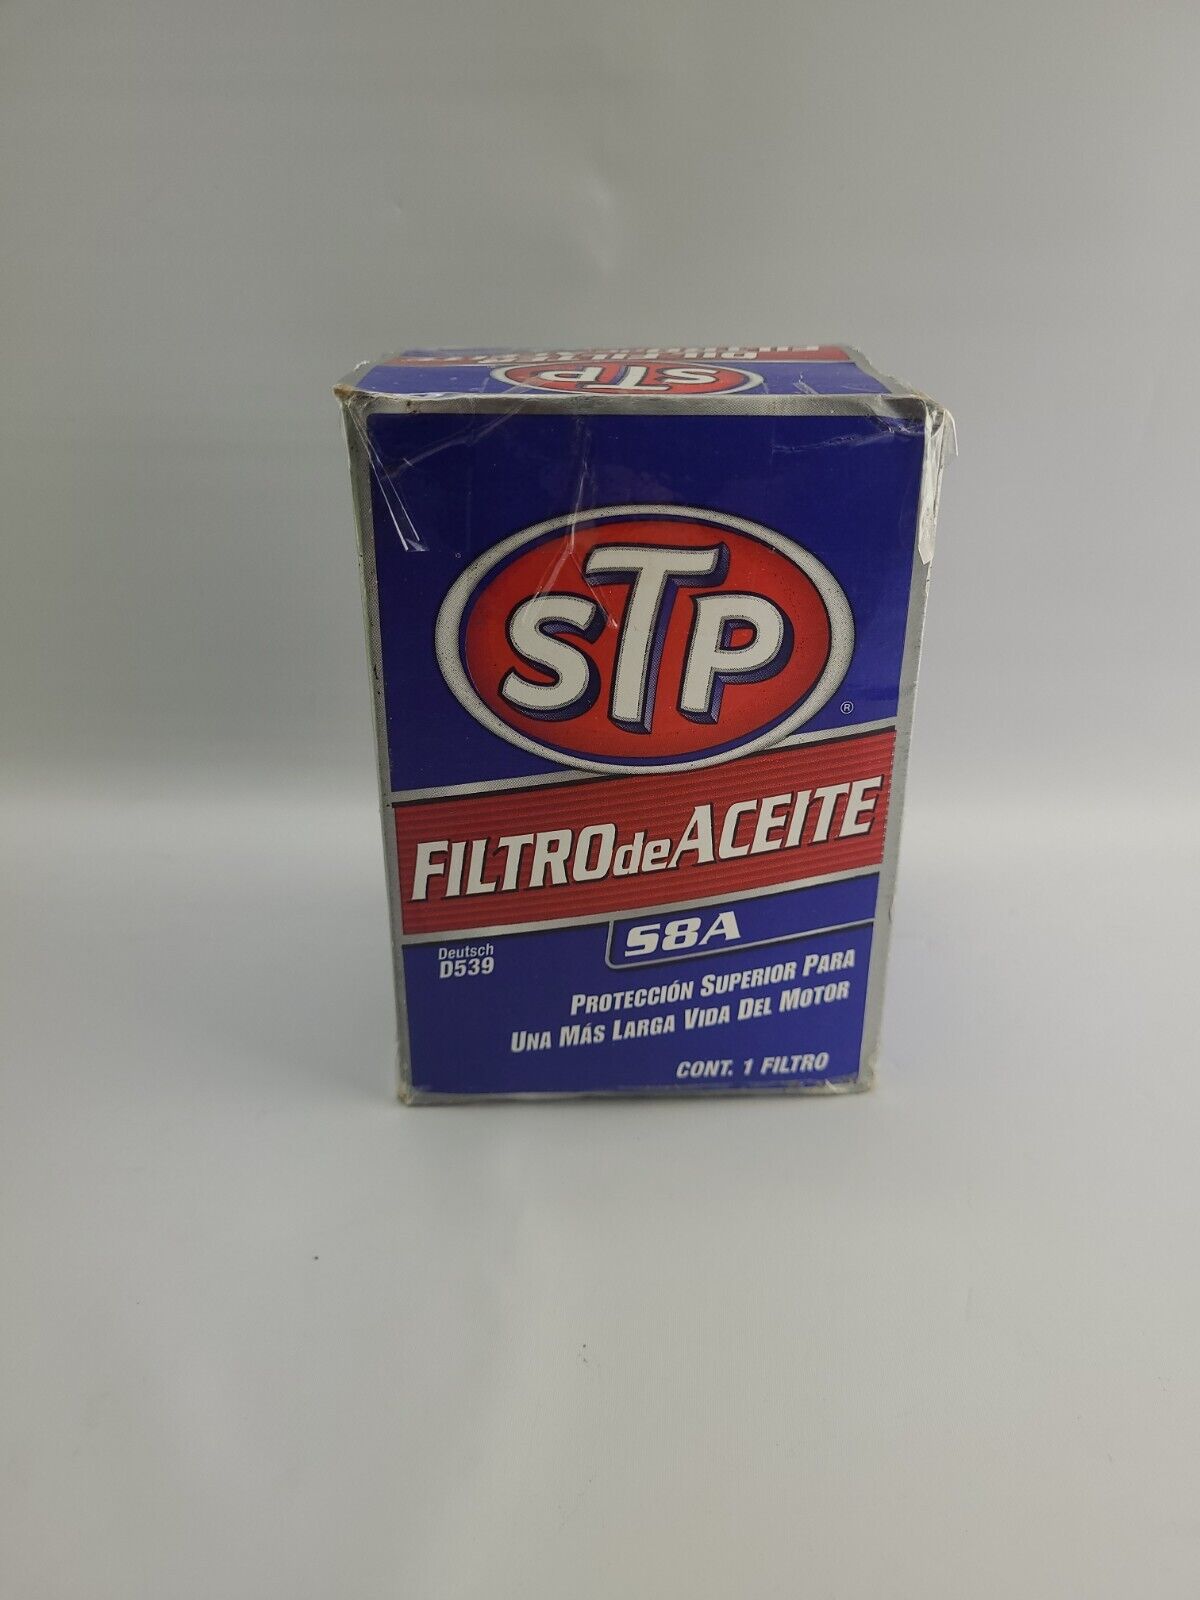 STP Oil Filter S8A 